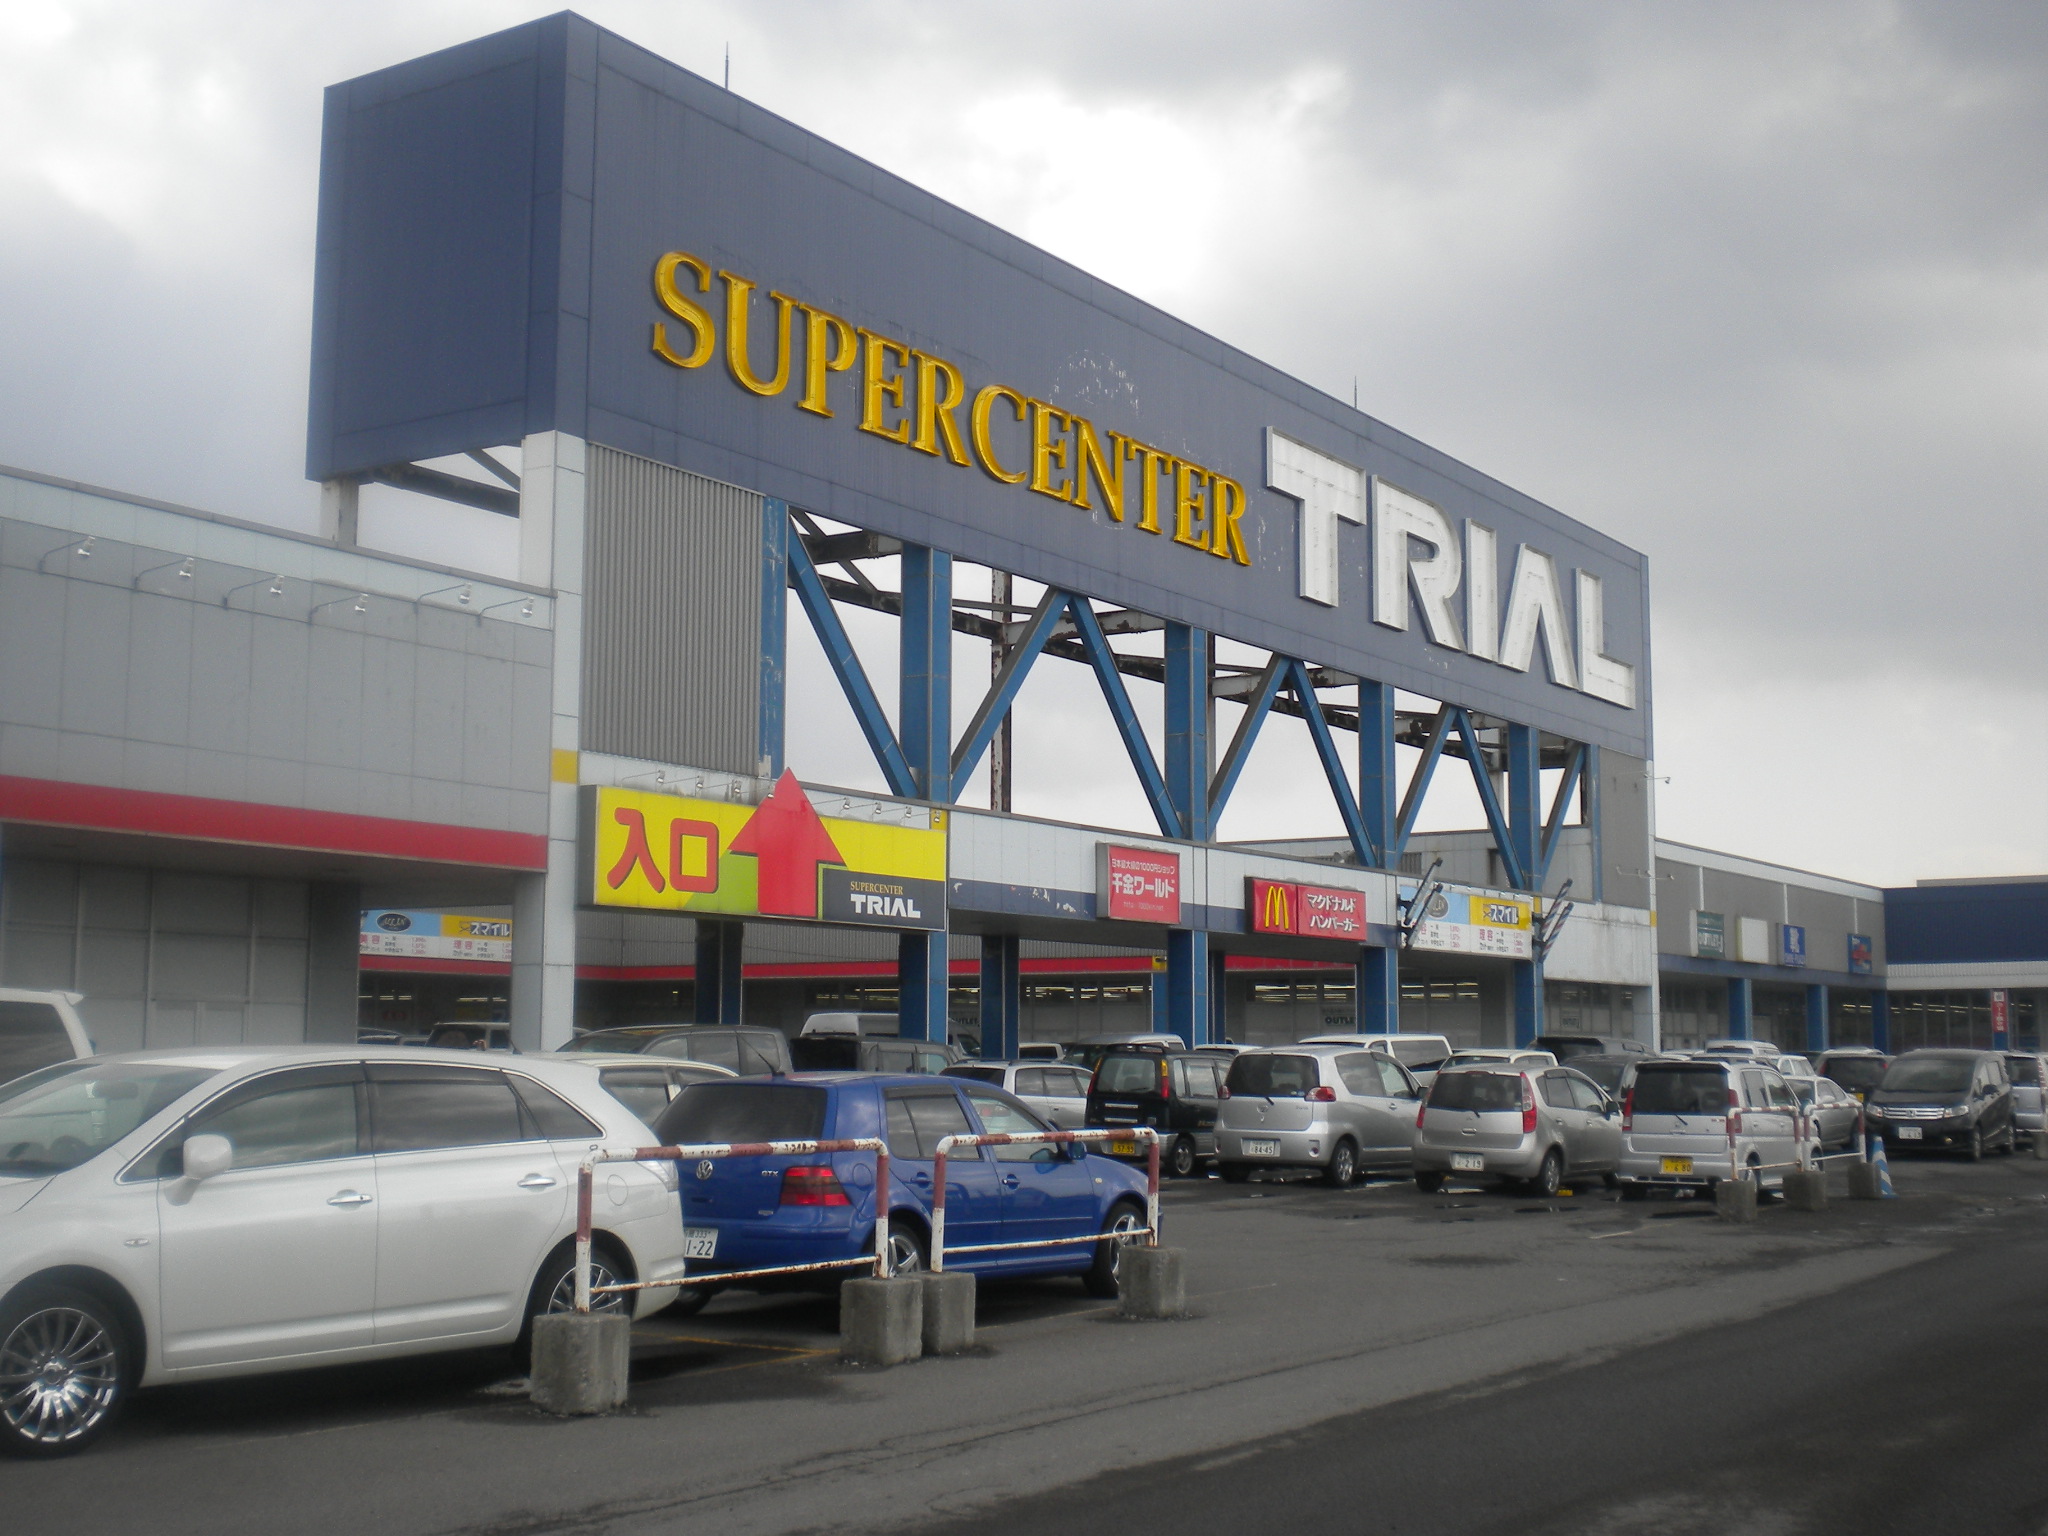 Supermarket. 1994m to supercenters trial Kamiiso store (Super)